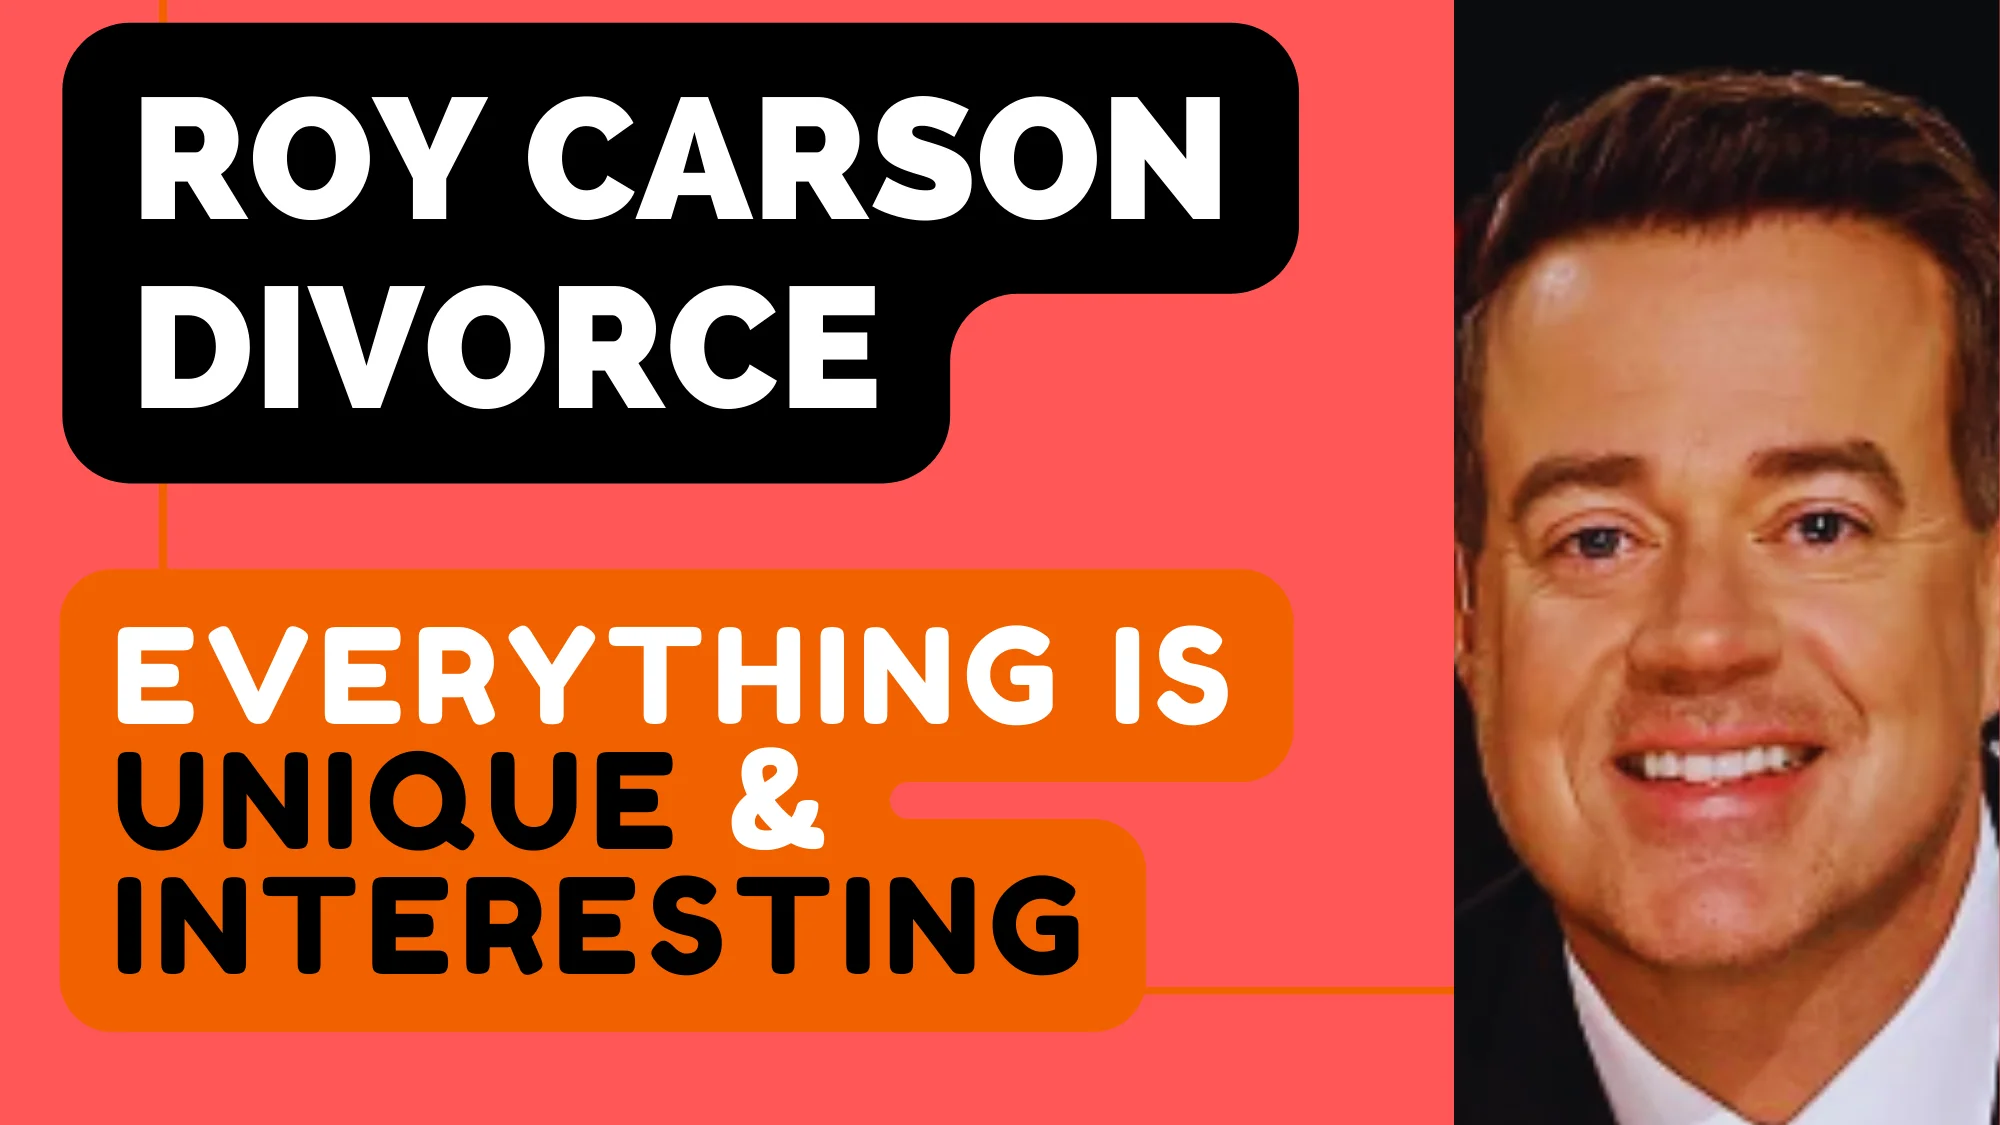 Roy Carson divorce